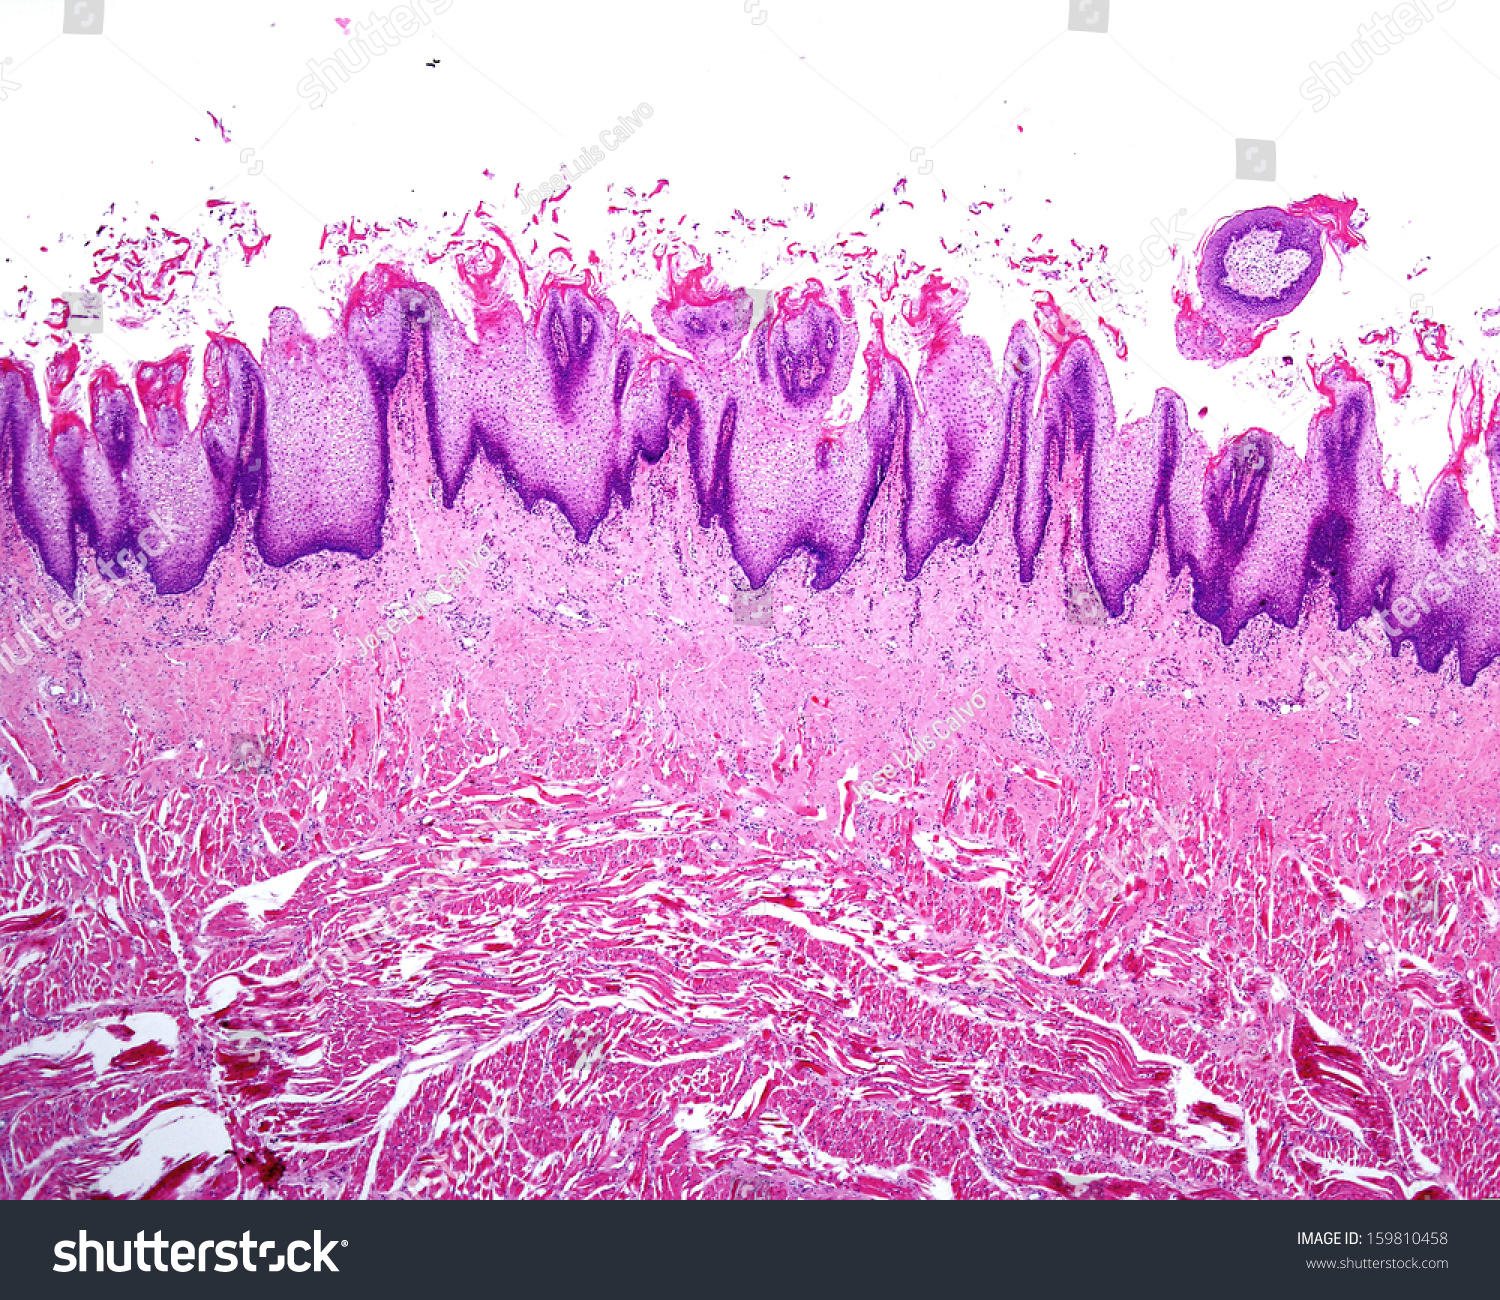 Fungiform Papillae Histology